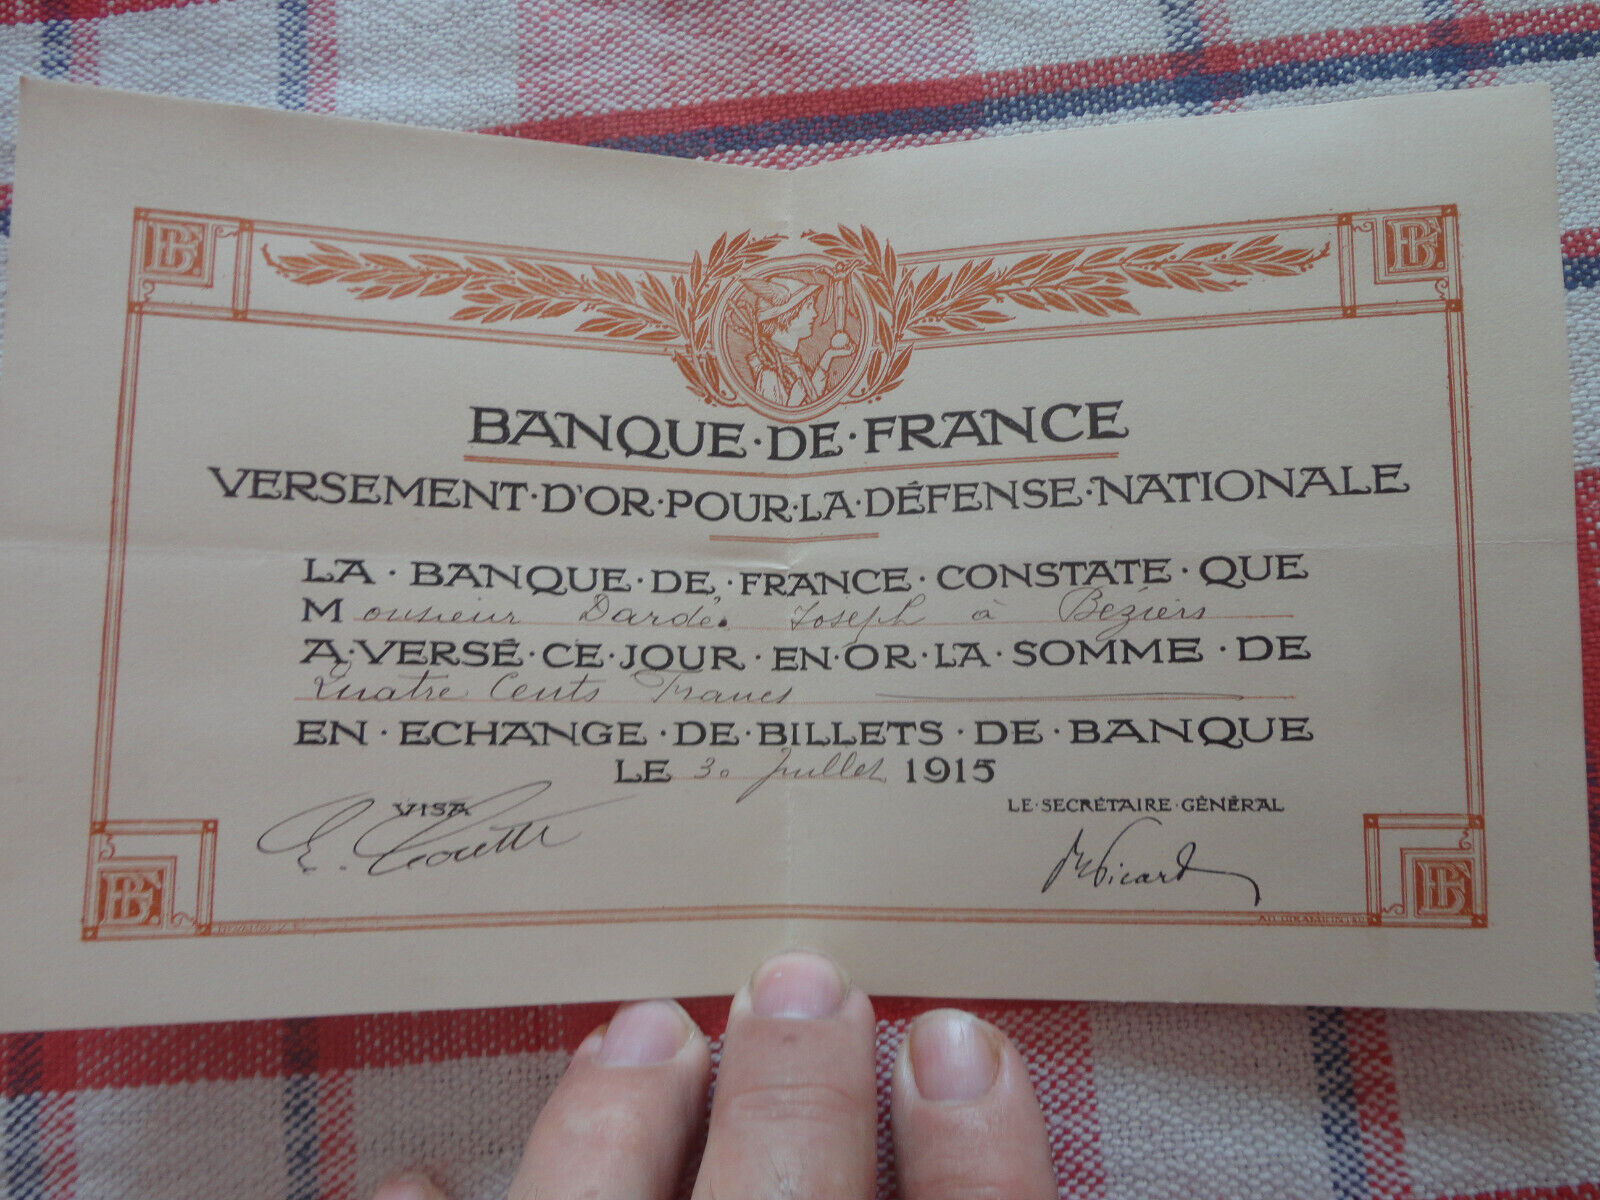 1915 BANK OF FRANCE GOLD PAYMENT 400 francs FOR NATIONAL DEFENSE